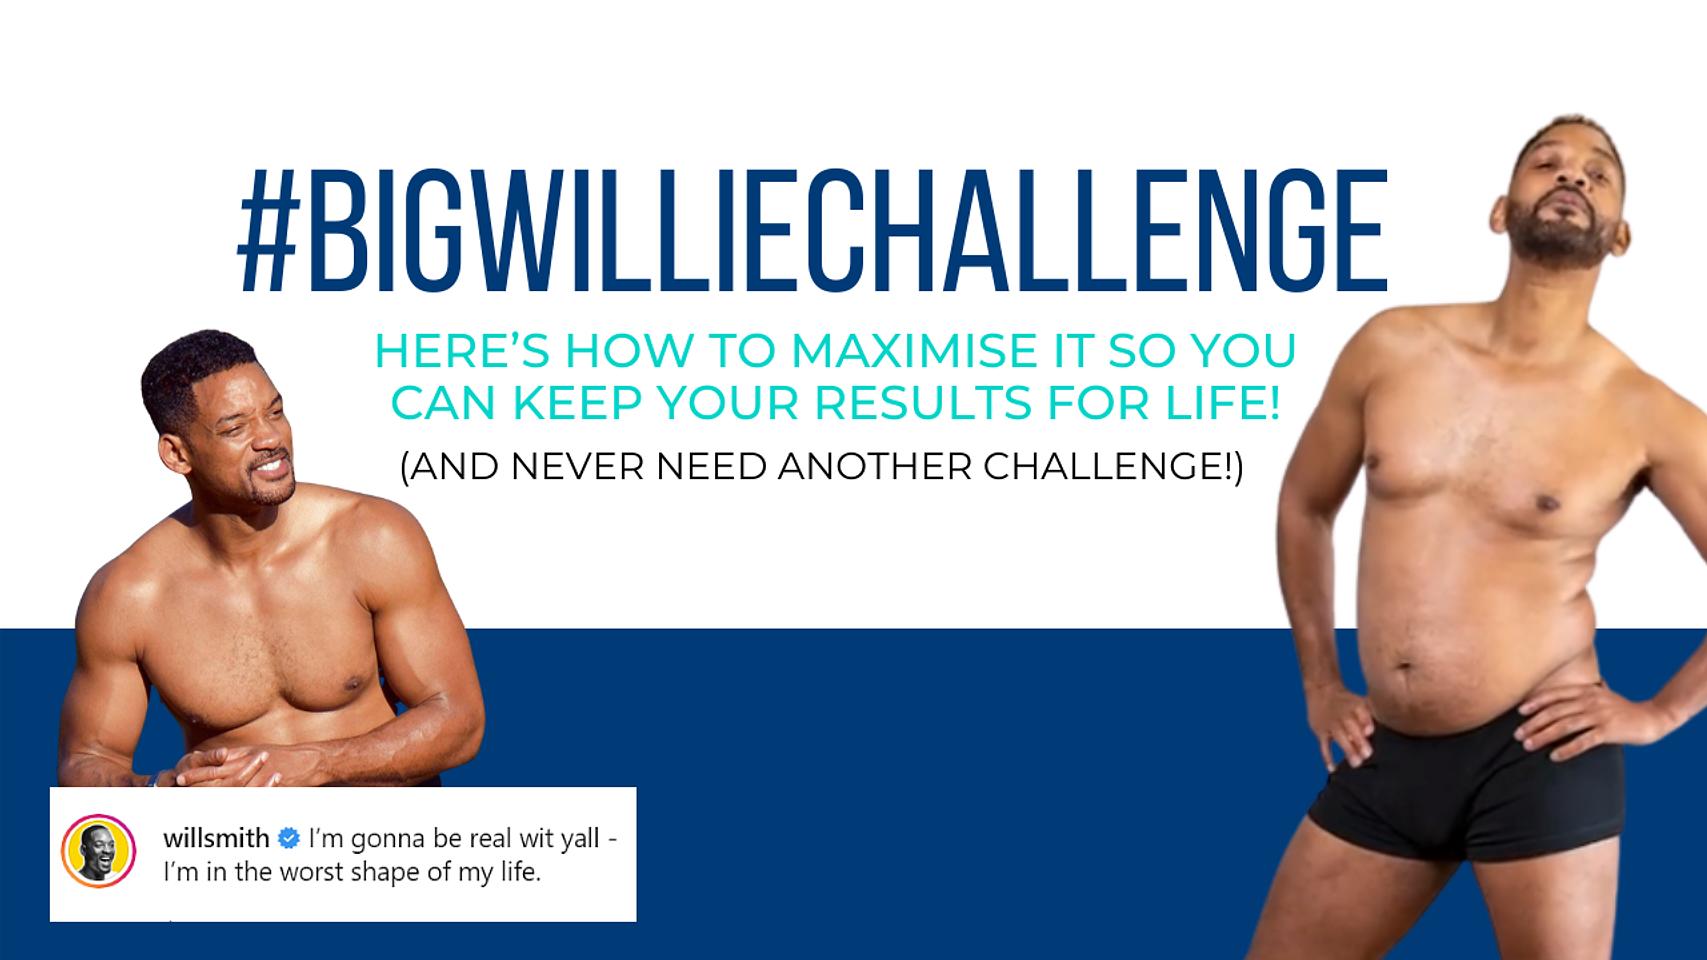 How To Maximise The #BigWillieChallenge